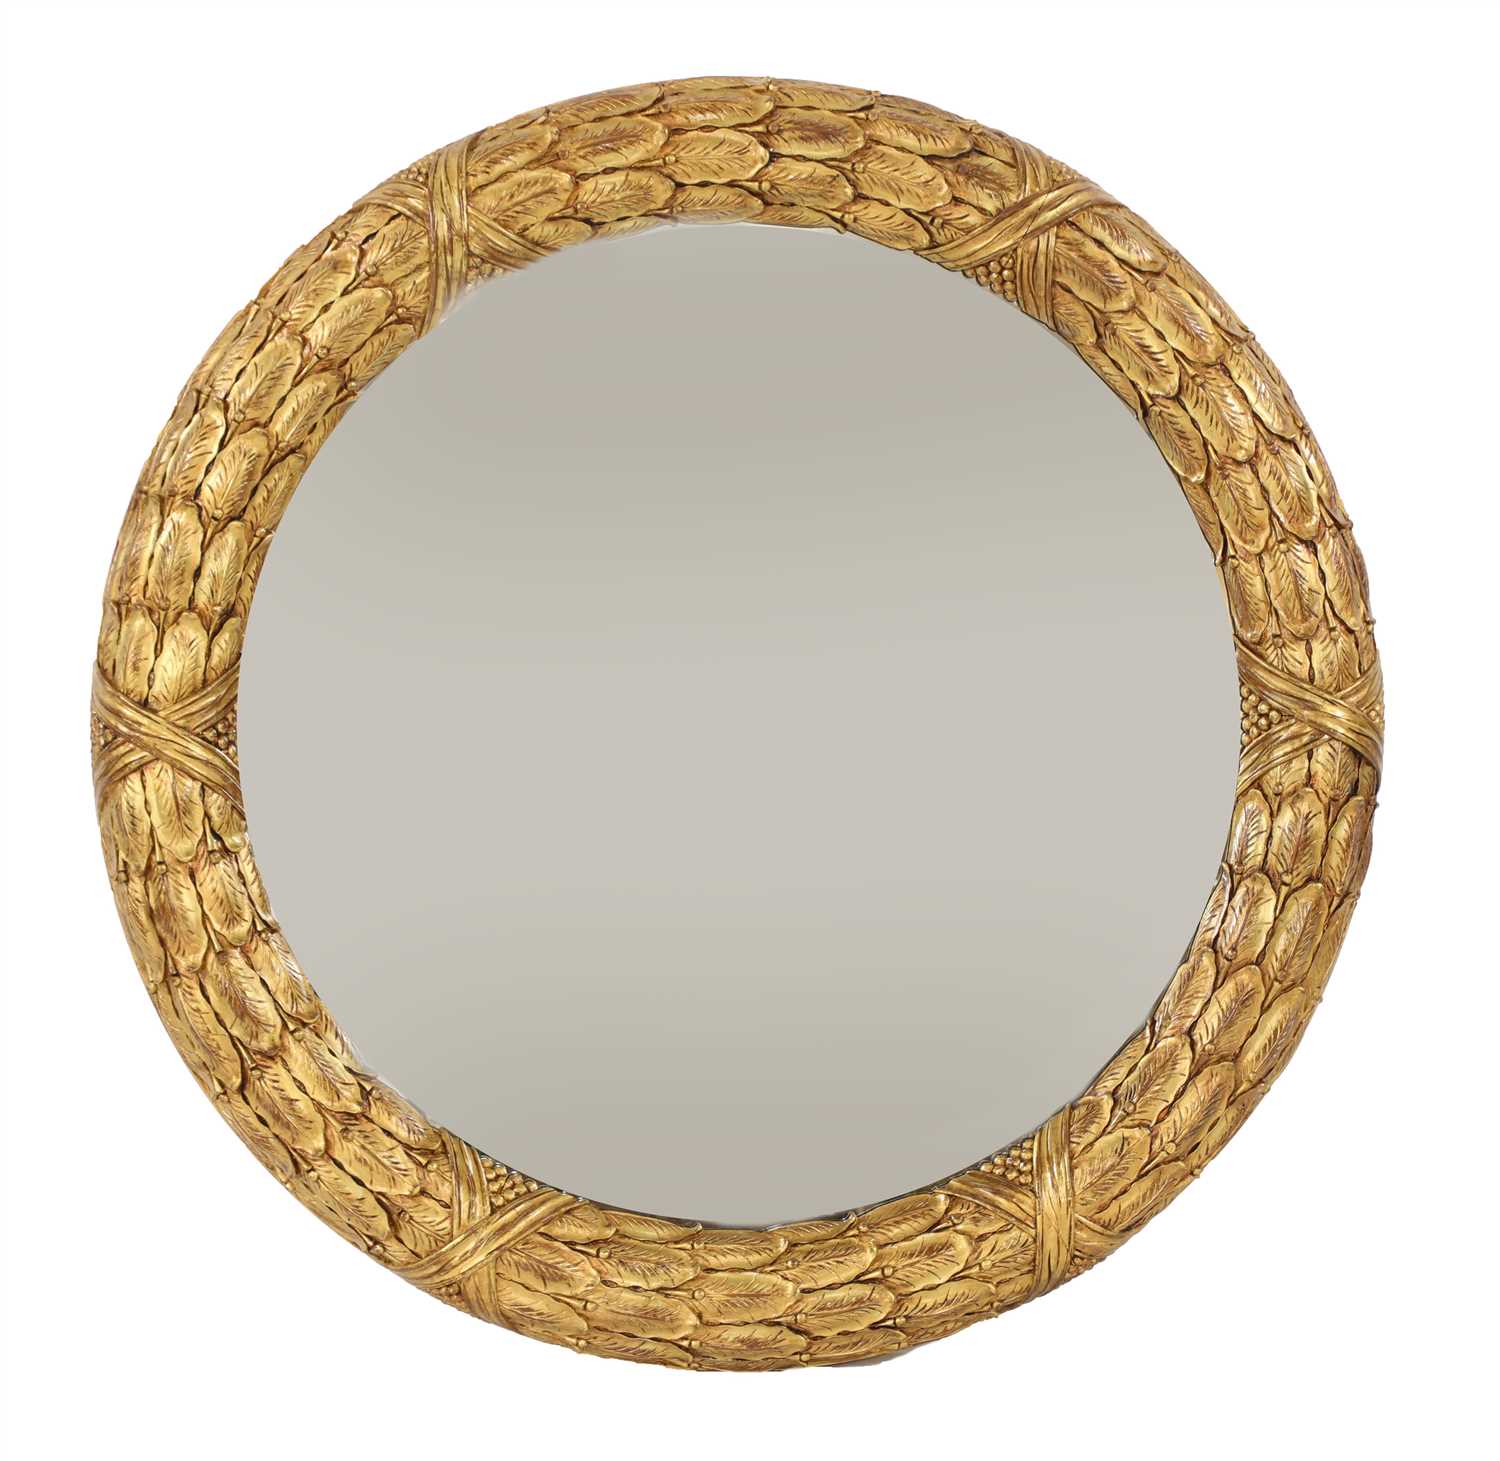 Lot 857 - A Regency-style gilt-framed circular mirror